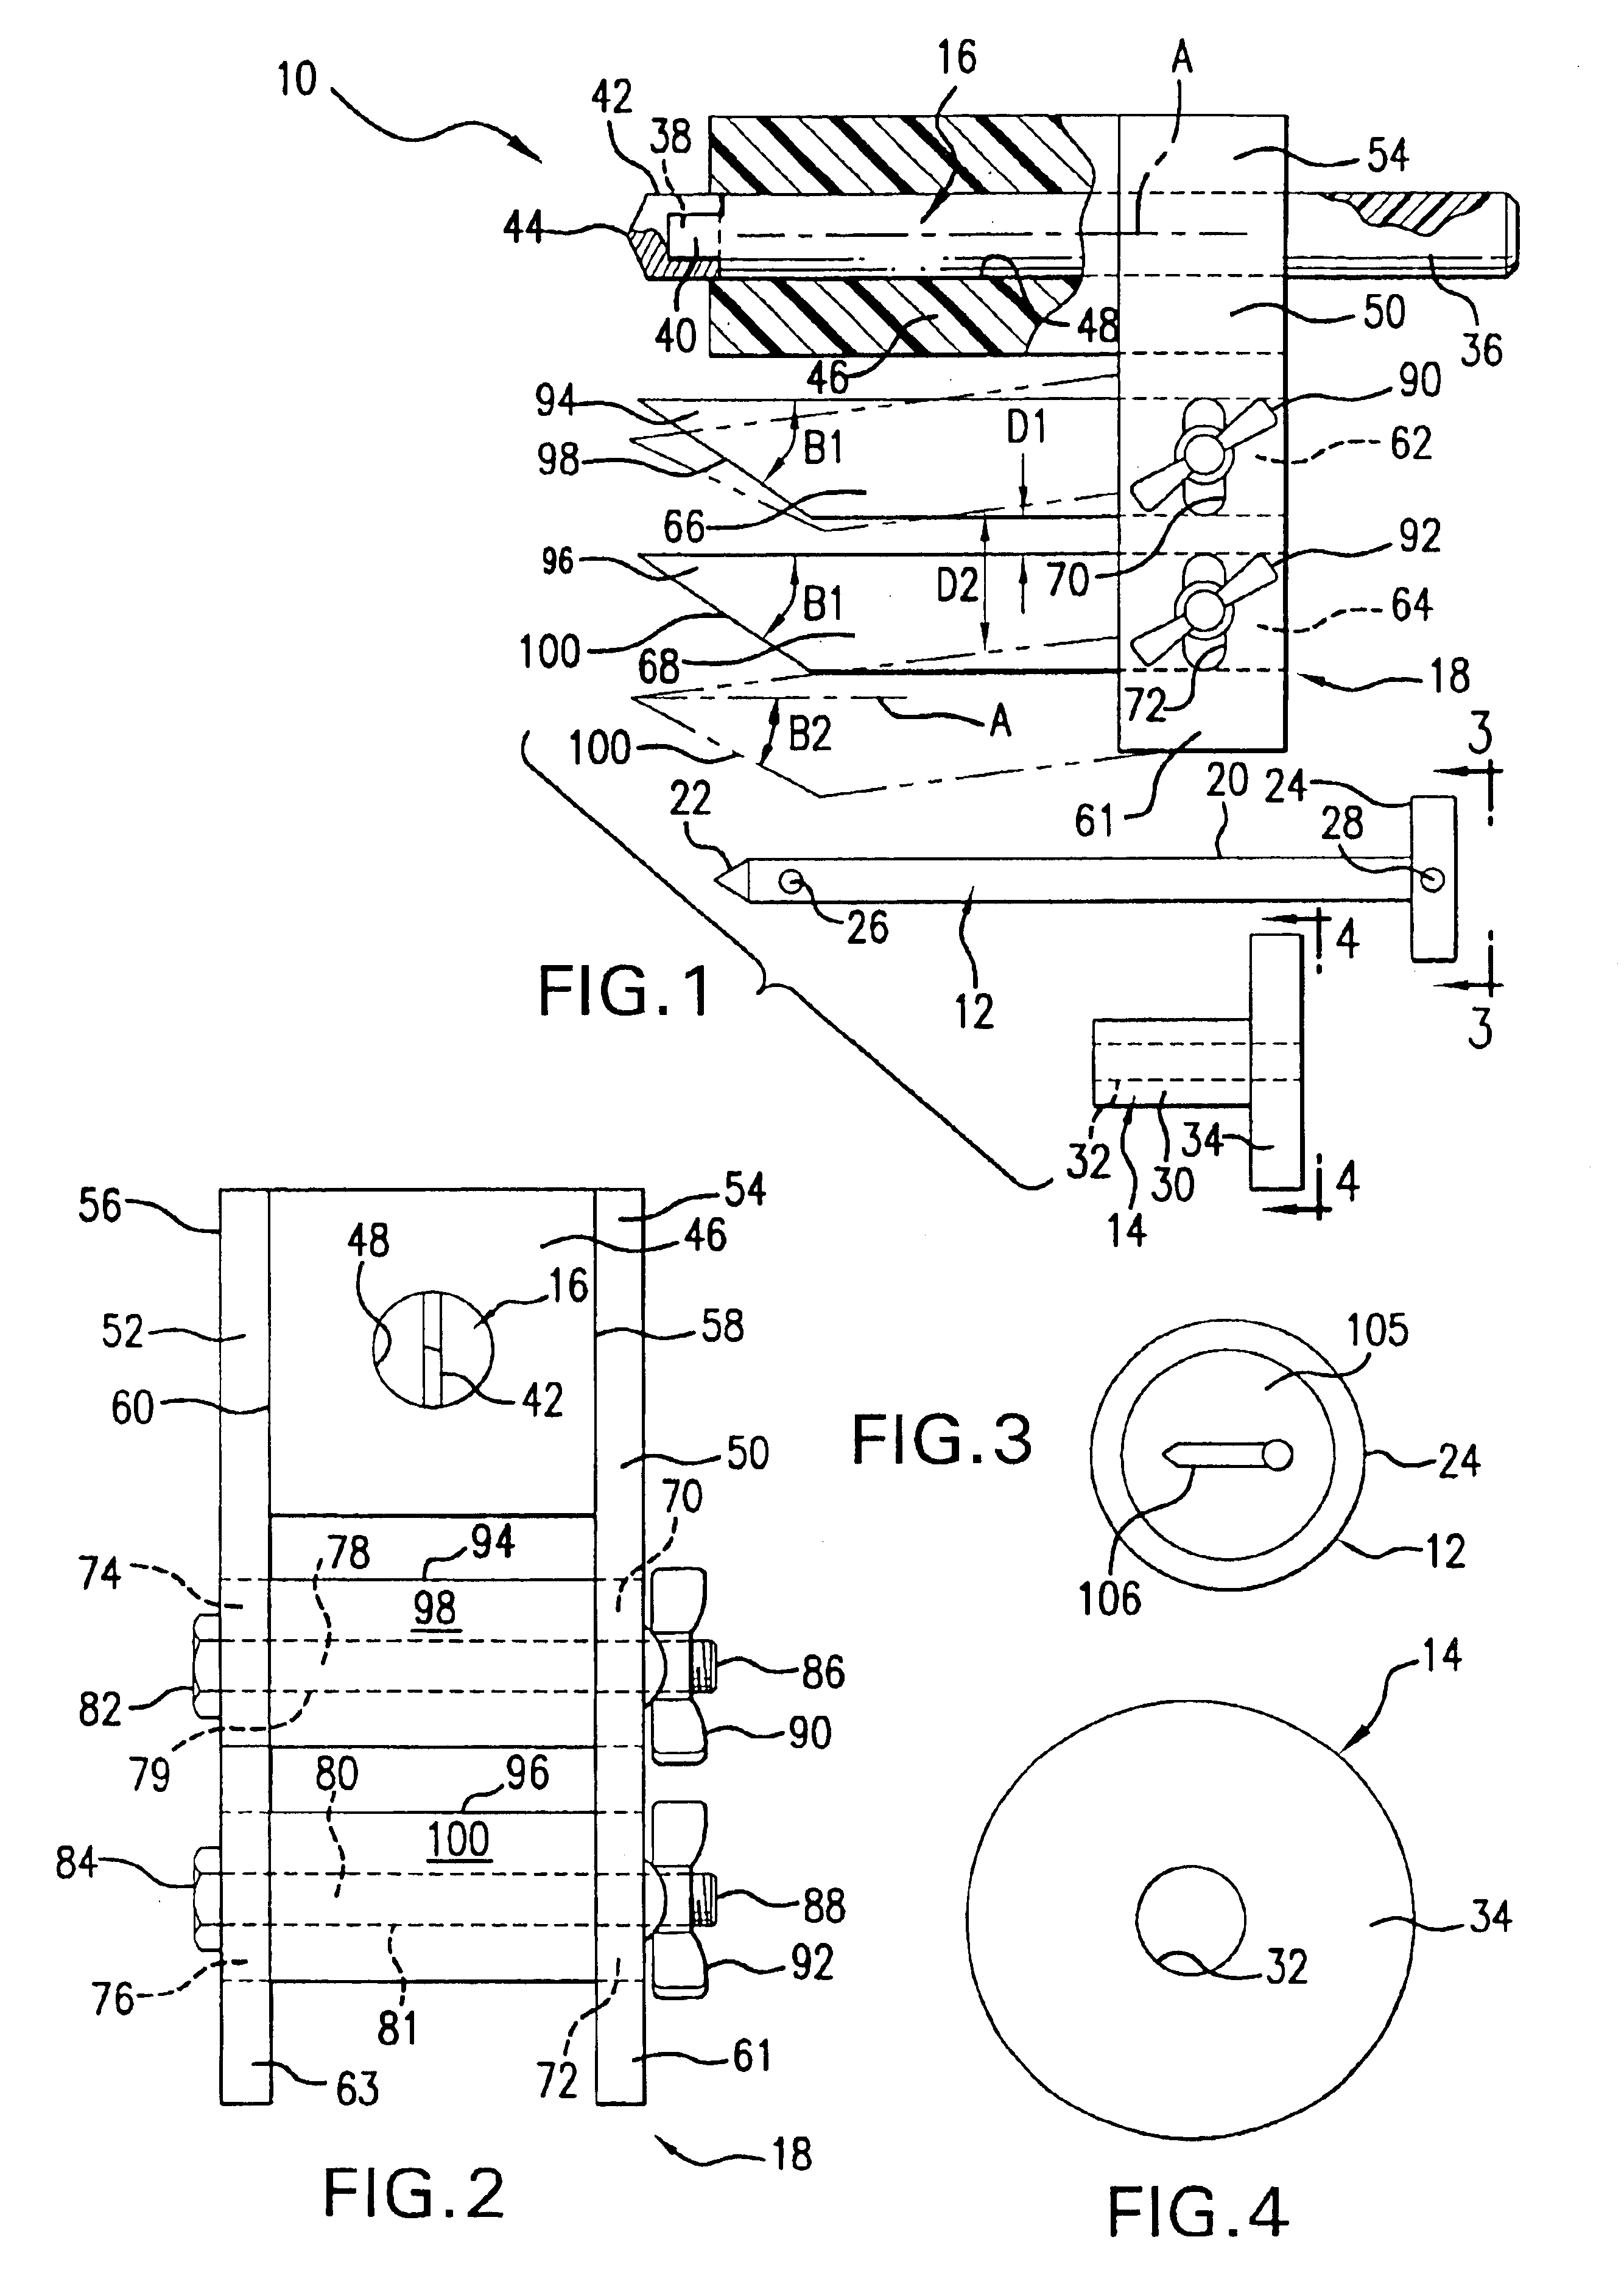 Air filter sensor apparatus kit and method